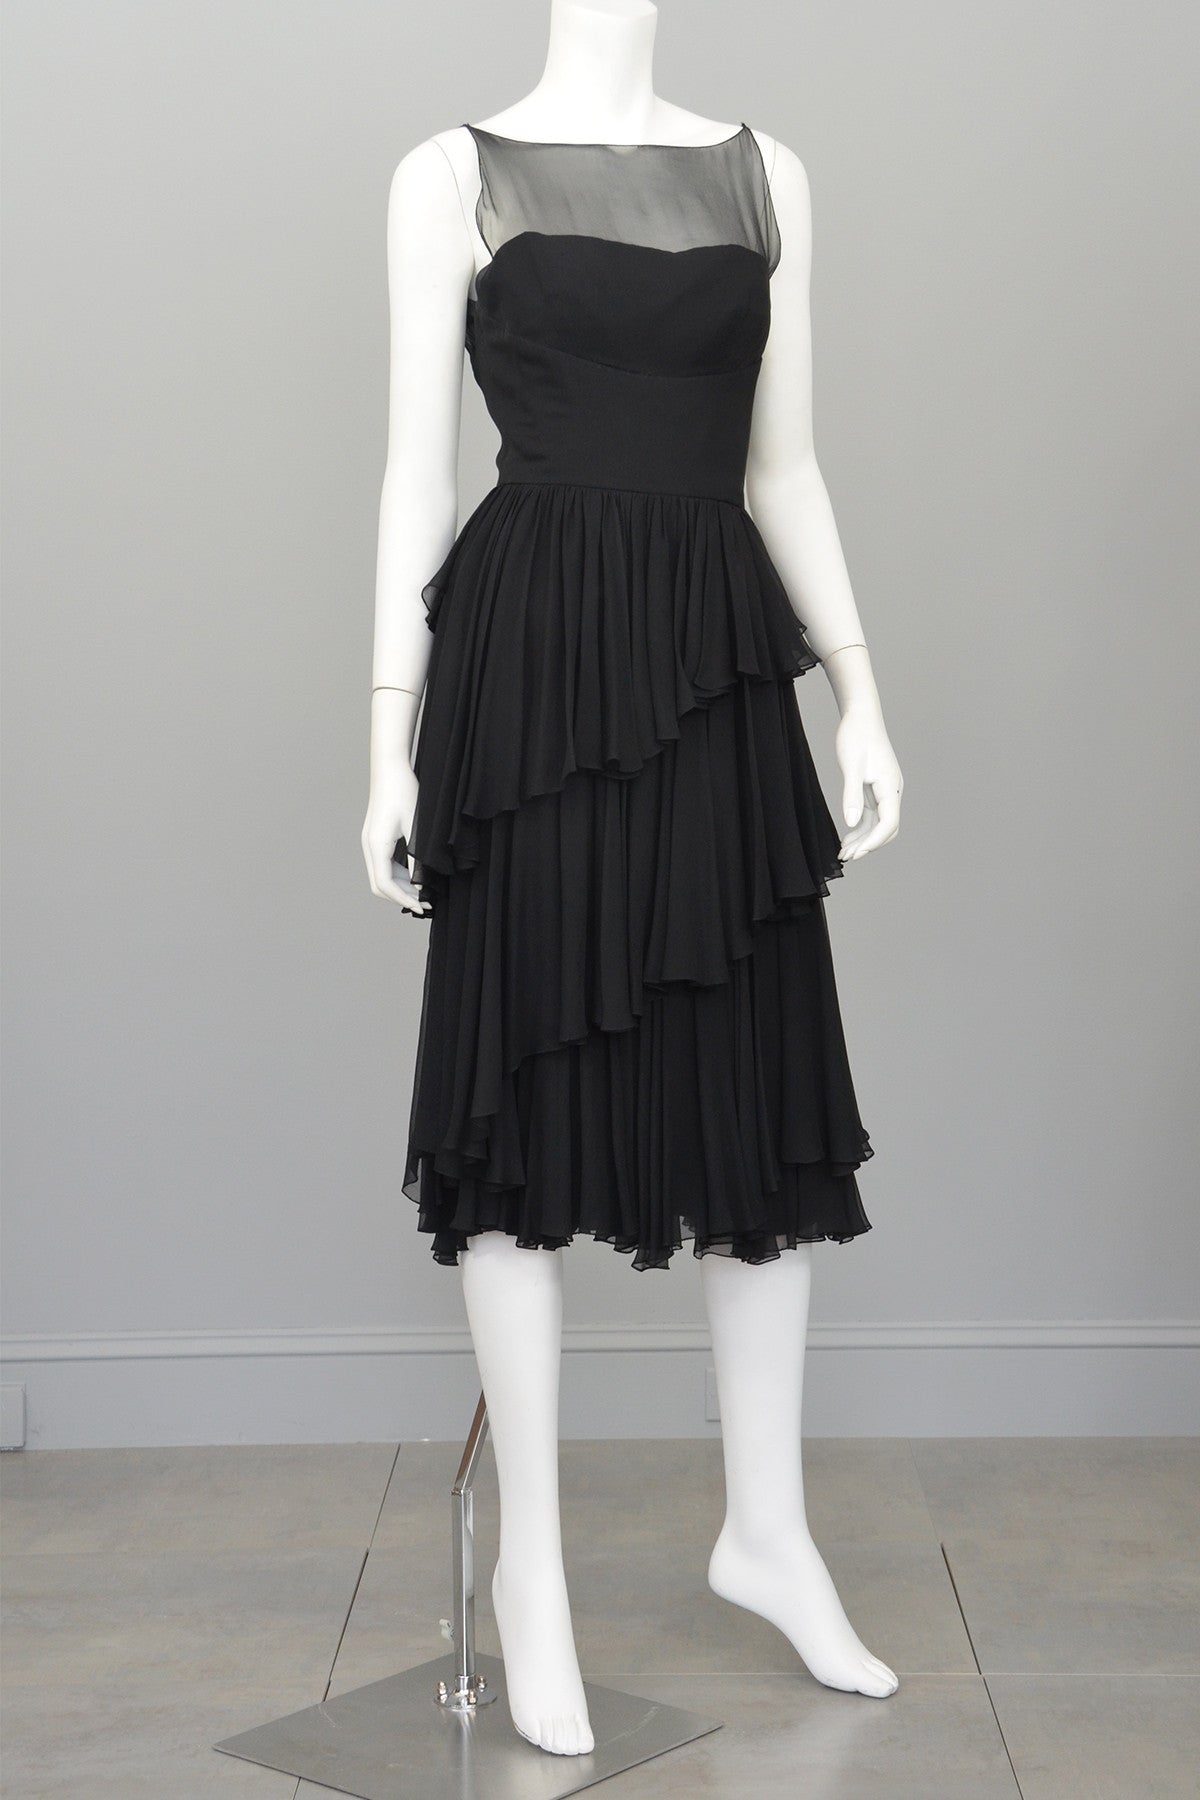 Vintage 1960s Black Chiffon Tiered Skirt Cocktail Dress